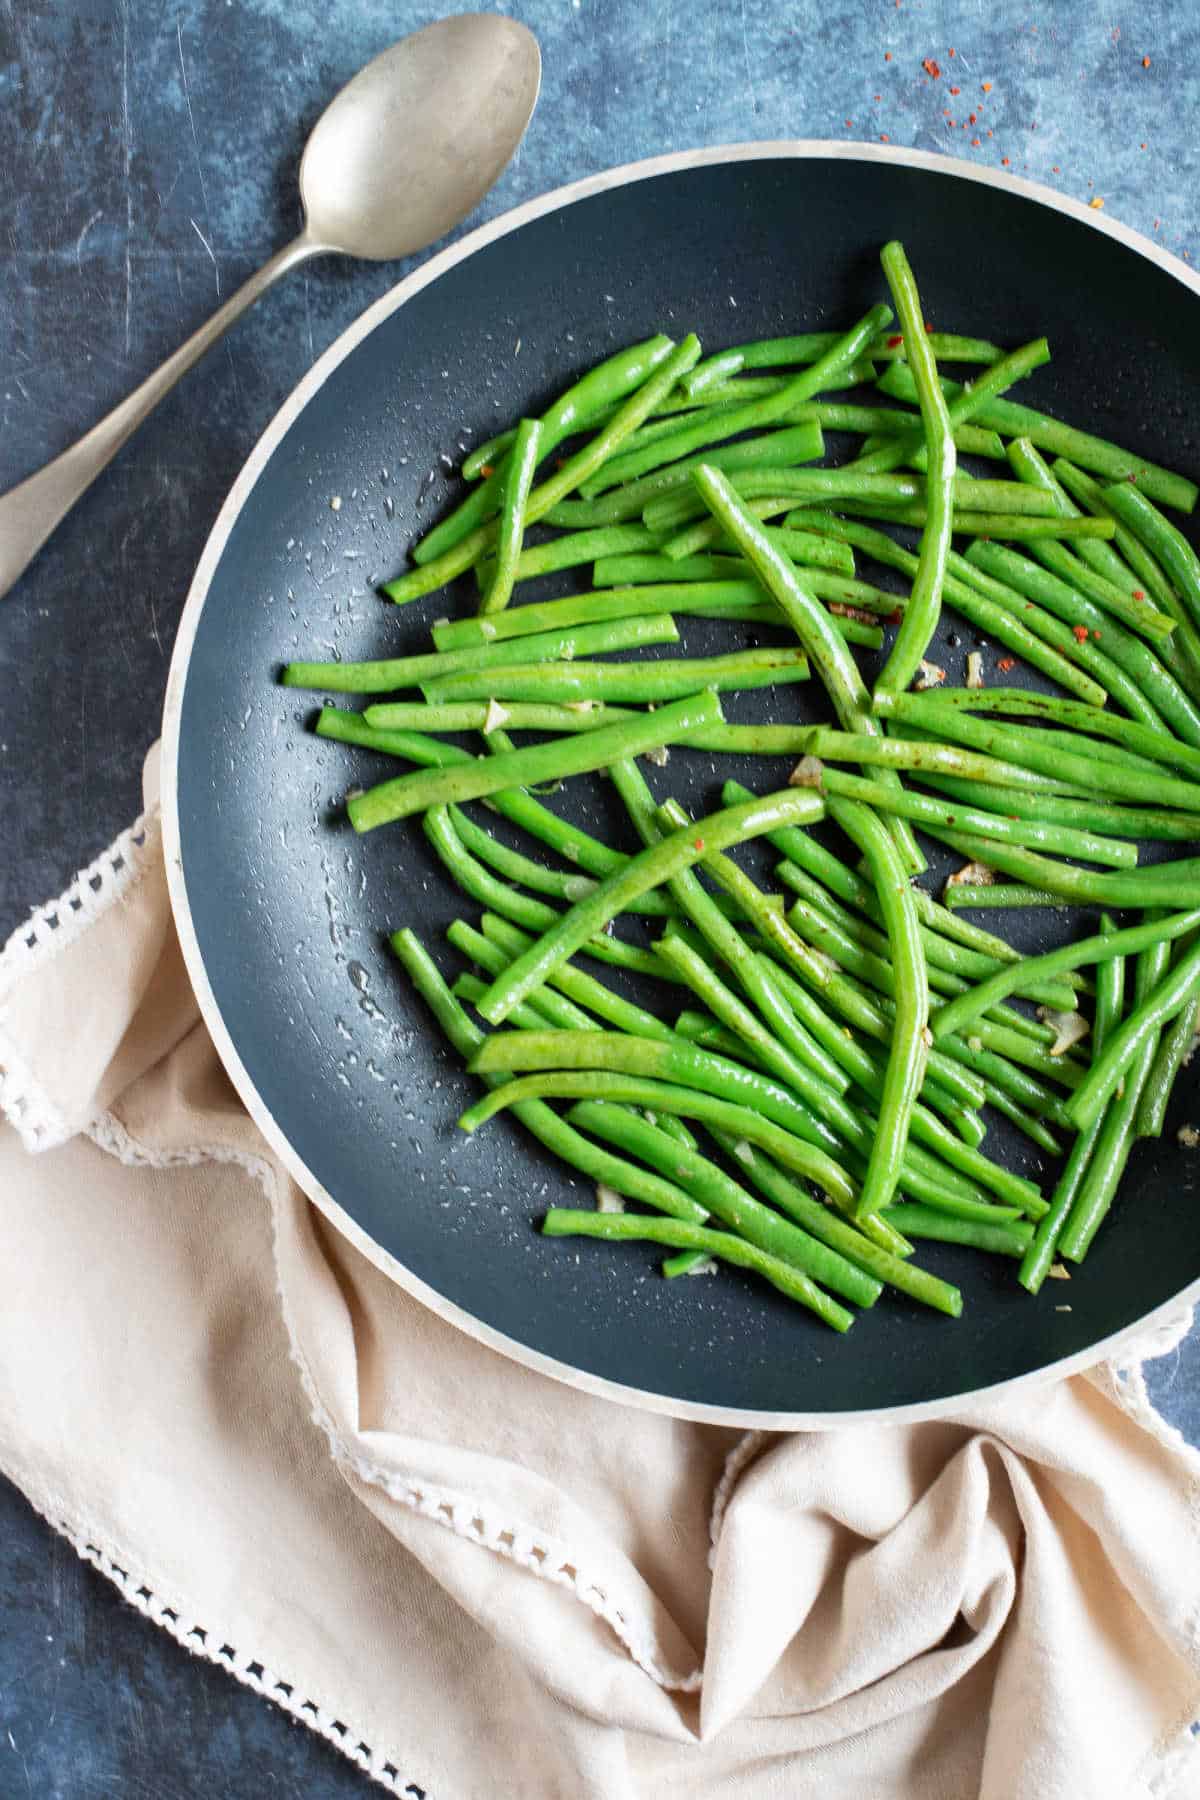 Green beans in a black wok.